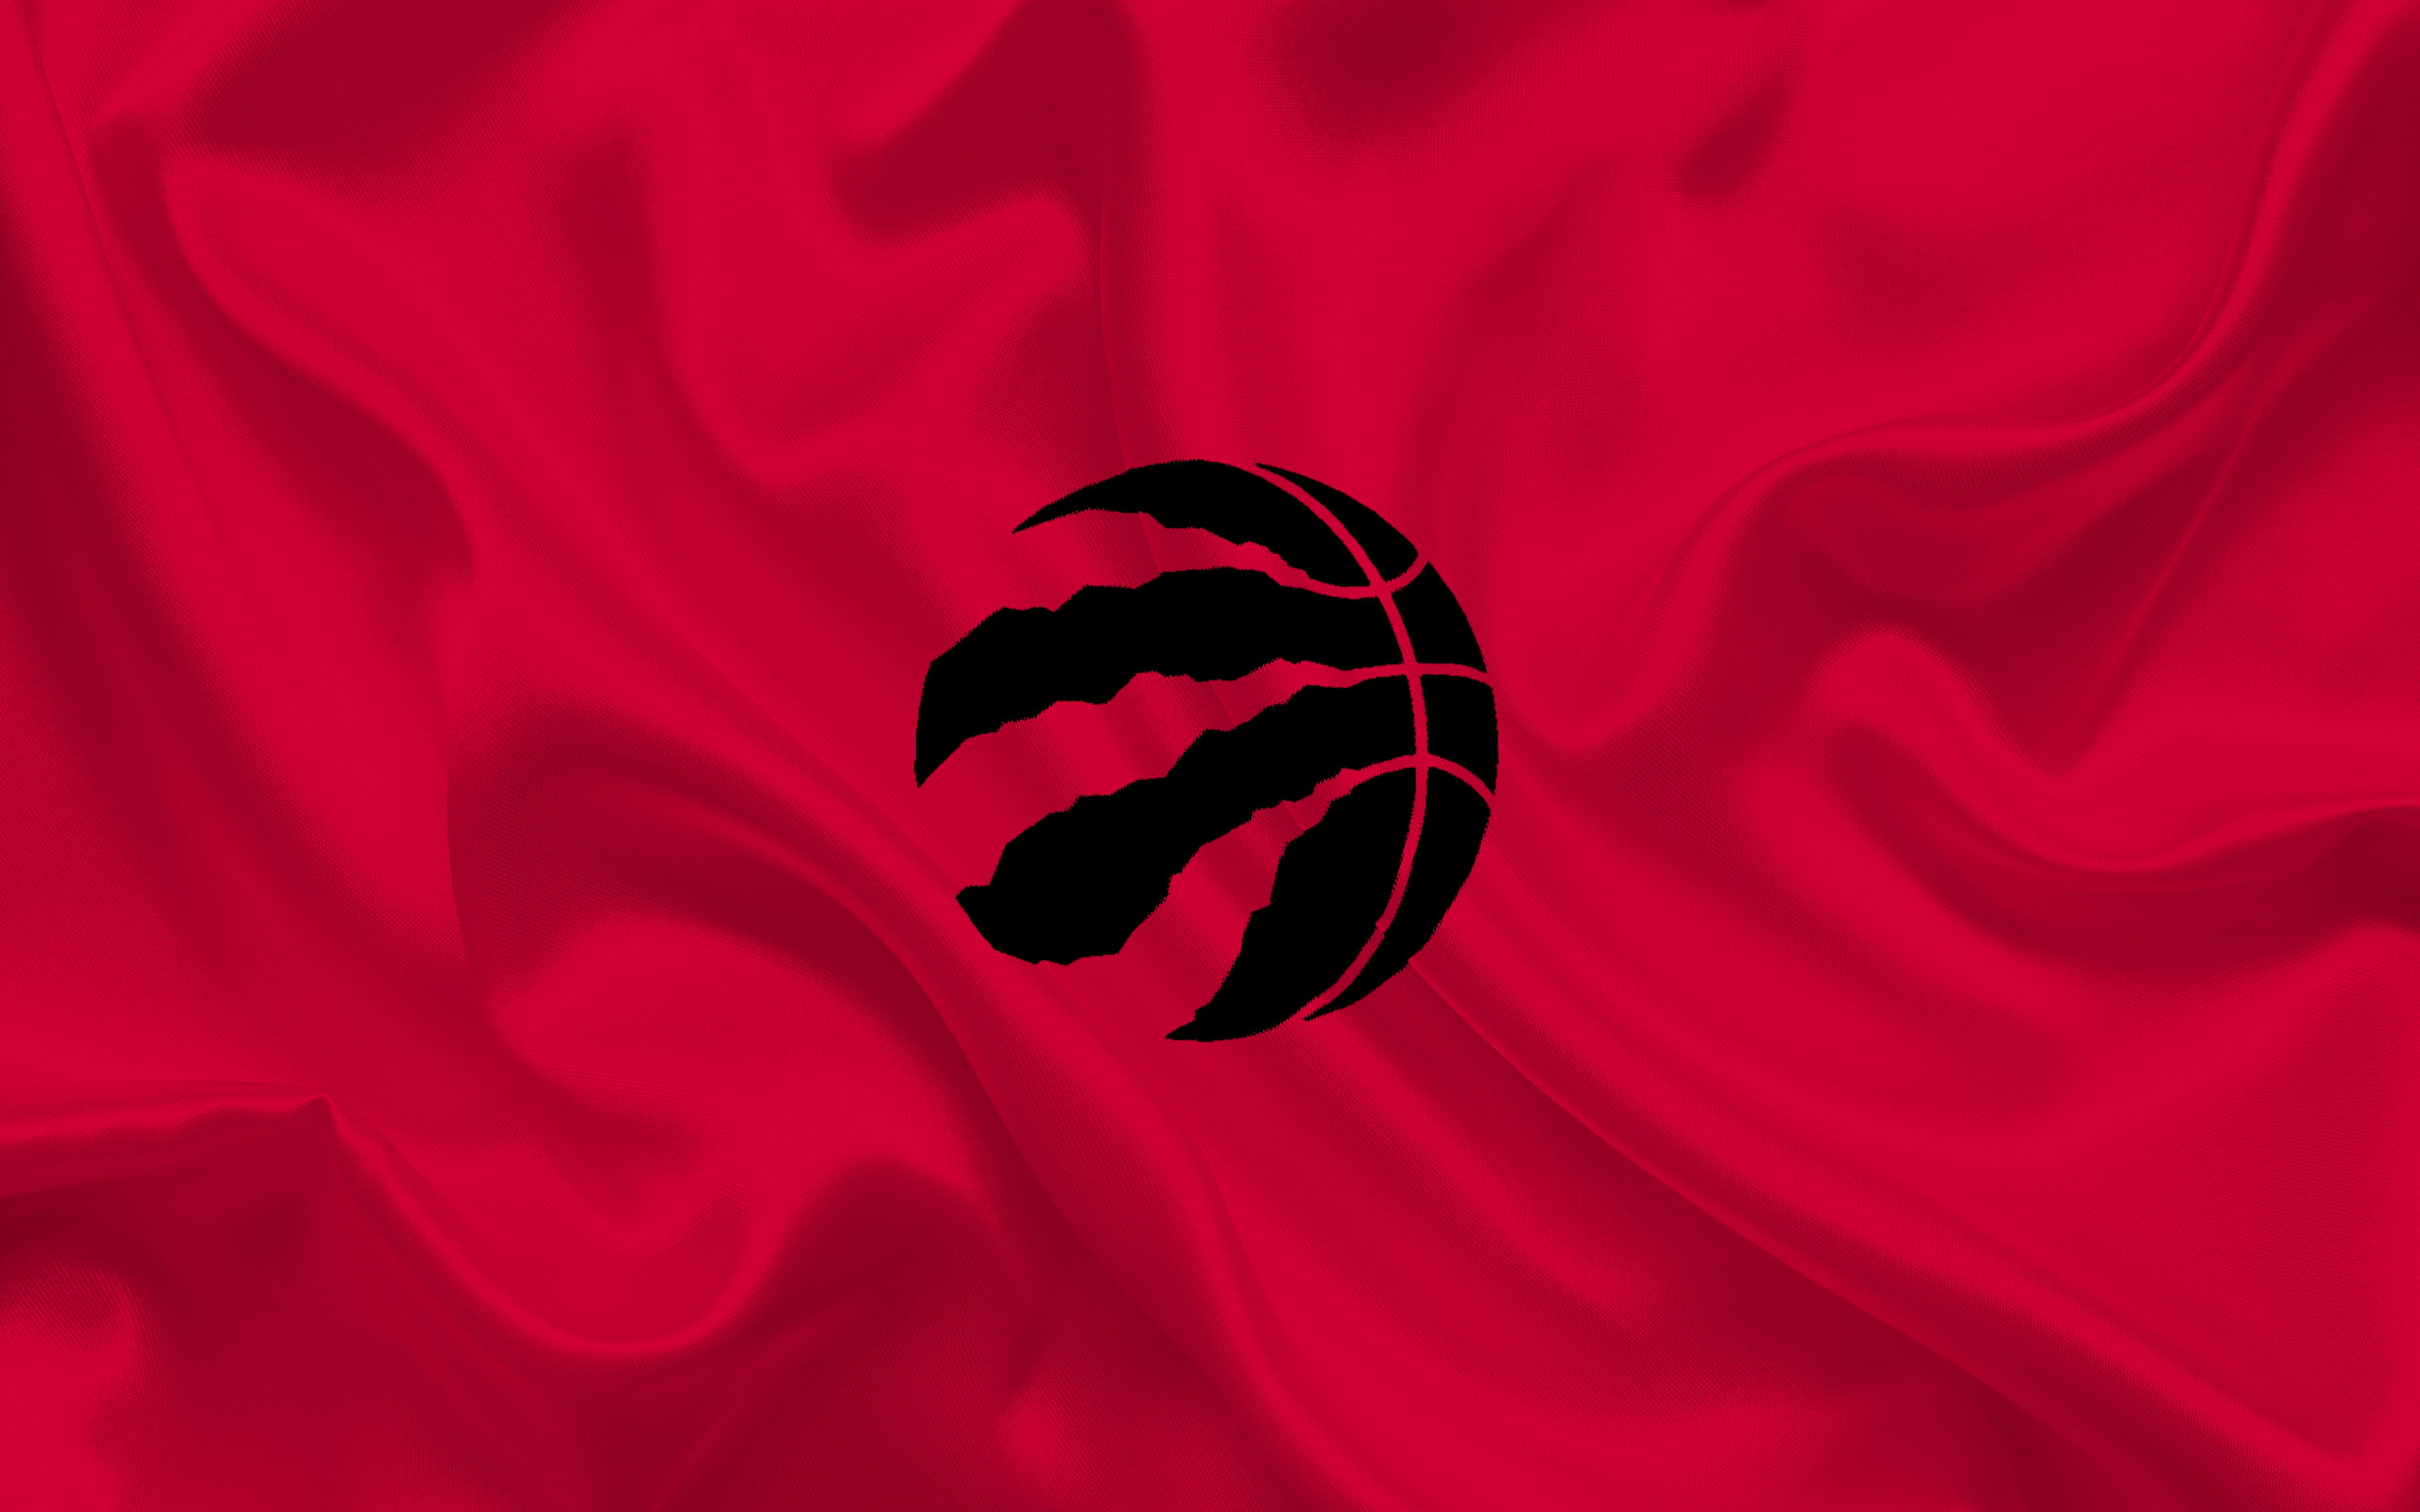 Basketball wallpaper, Toronto Raptors, Logo, NBA